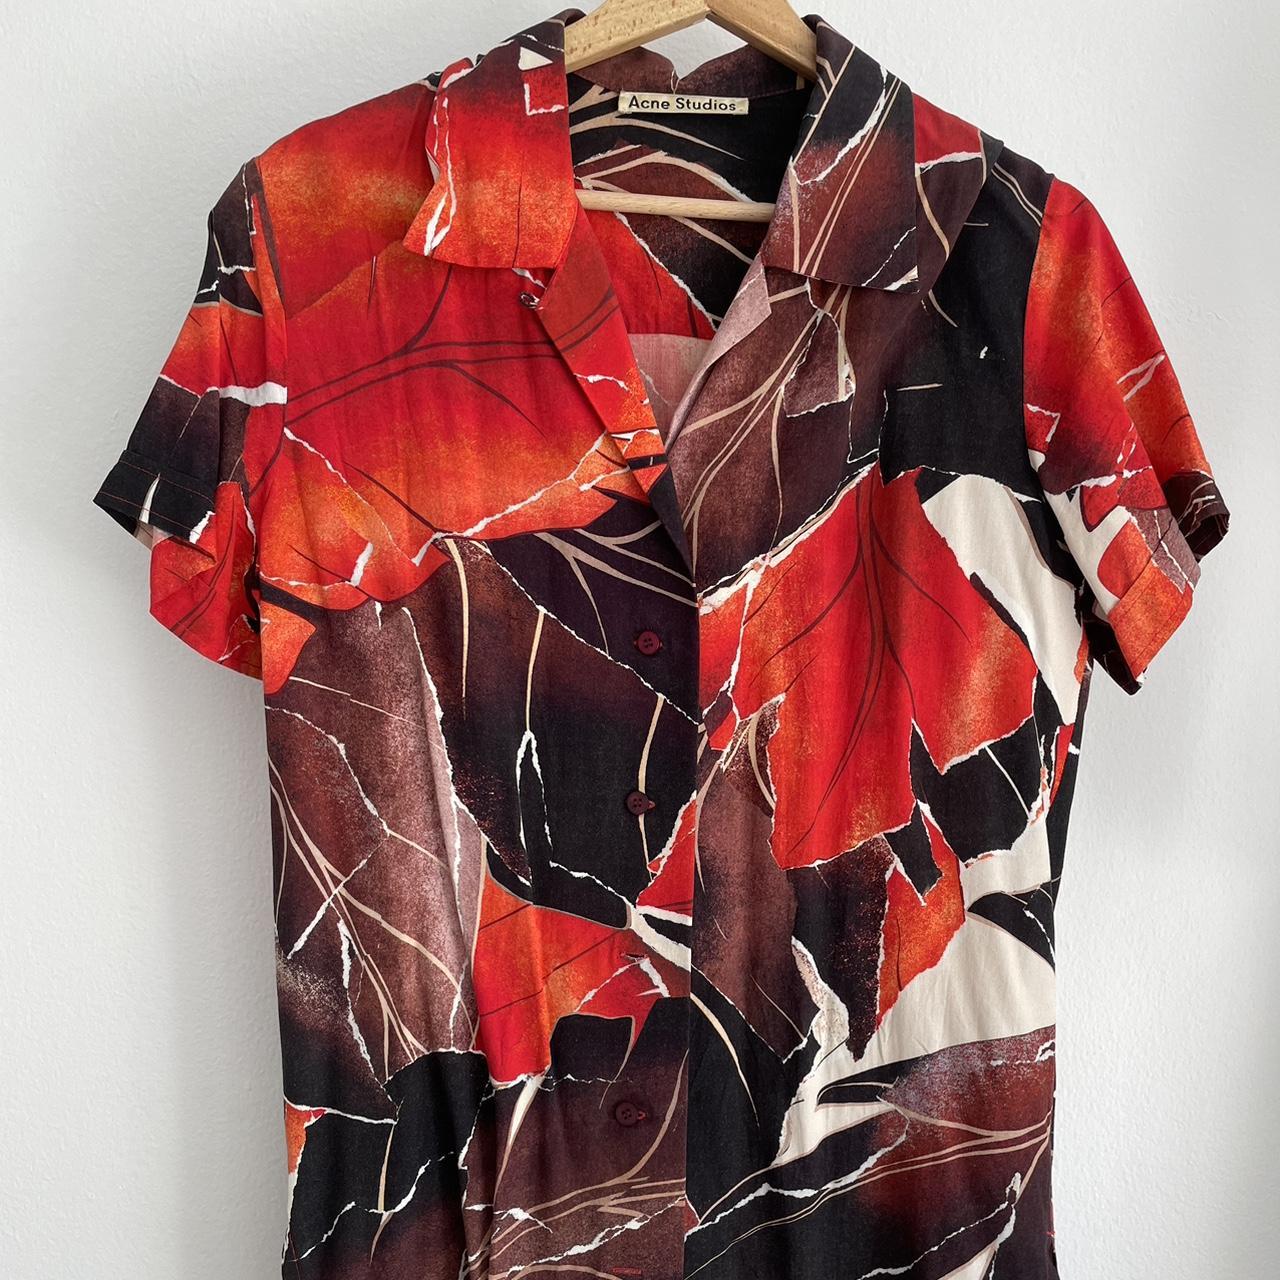 Acne Studios Rellah Shirt, Size 32, #streetwear...